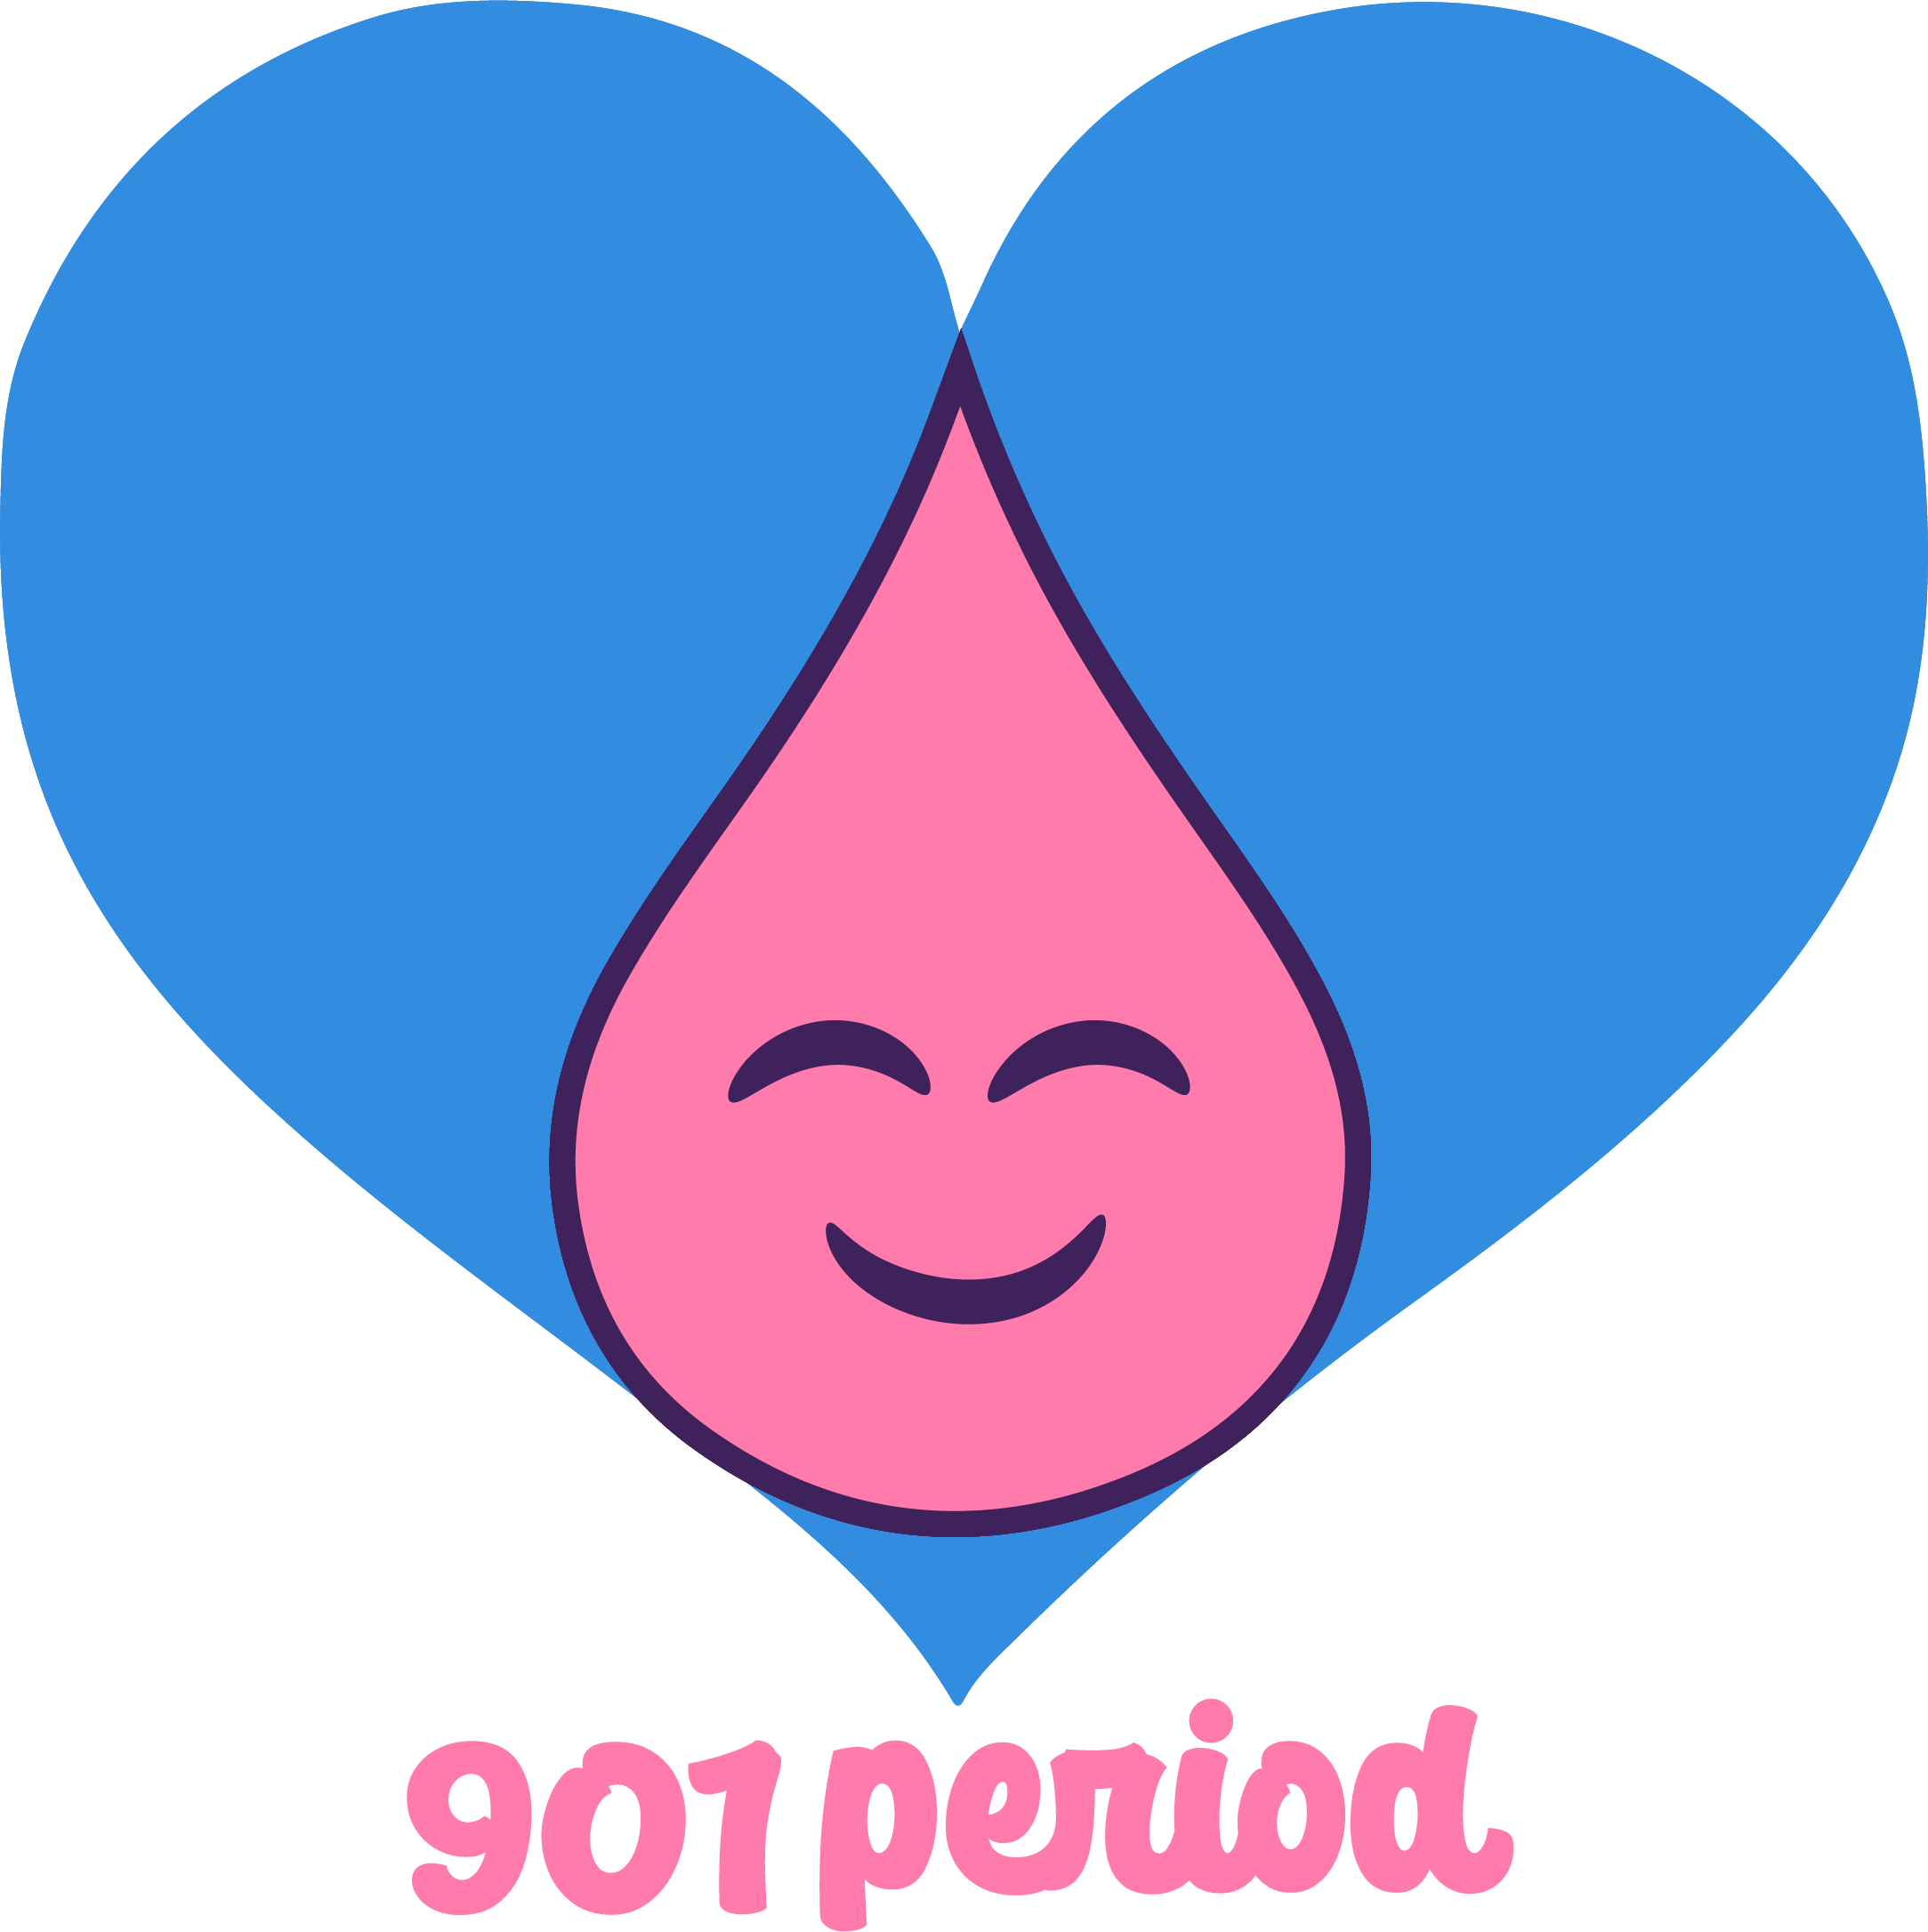 901 Period logo - Necessity, not Luxury